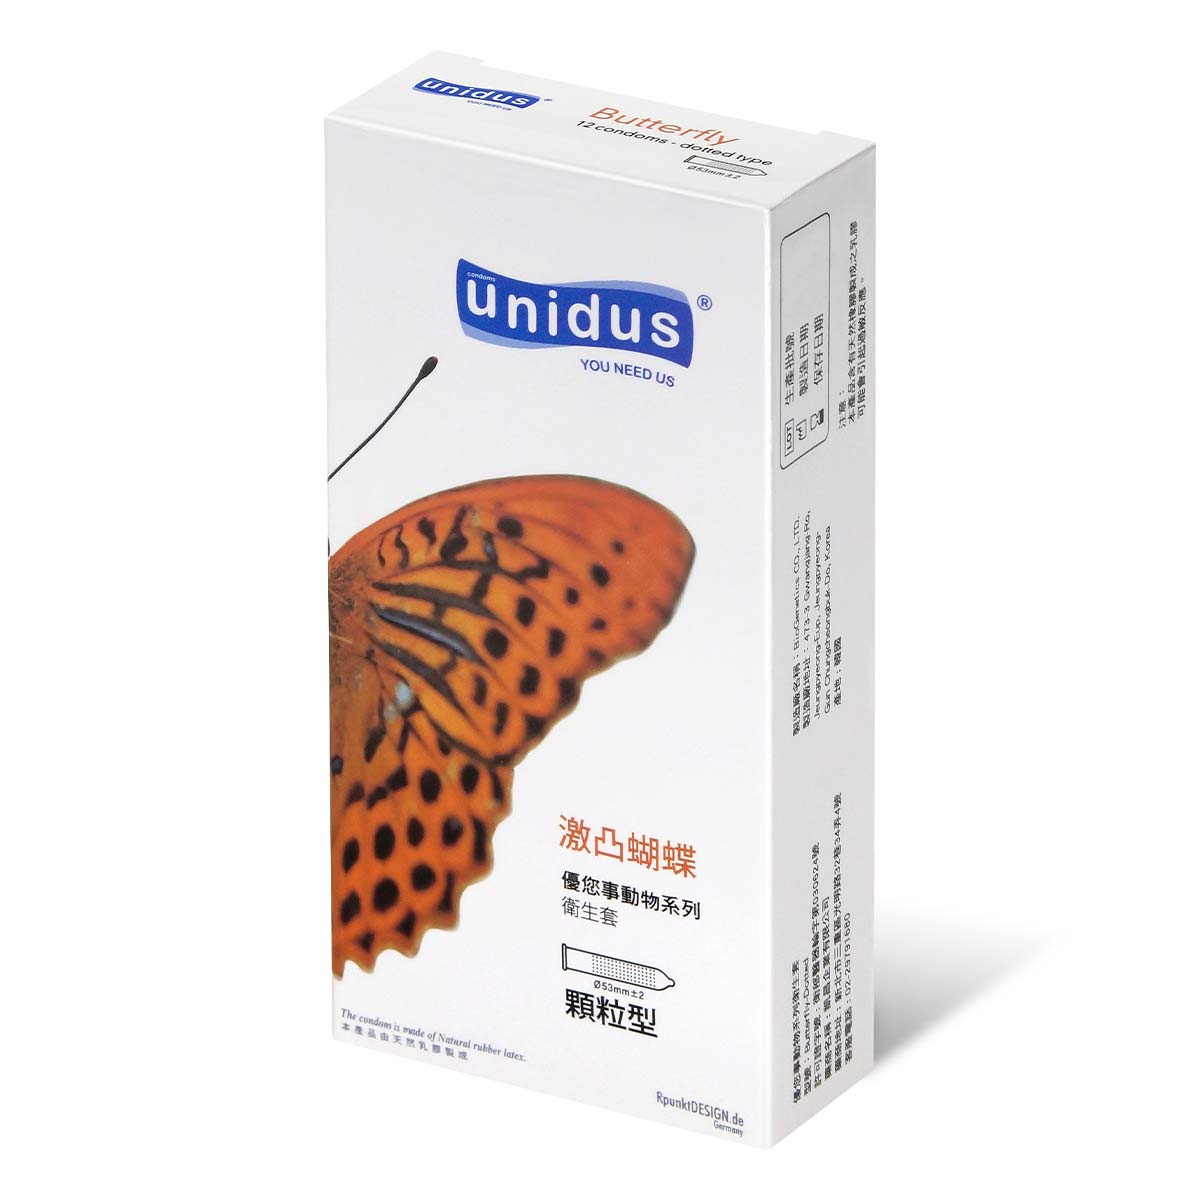 Unidus 優您事動物系列保險套 激凸蝴蝶 顆粒型 12 入-p_1